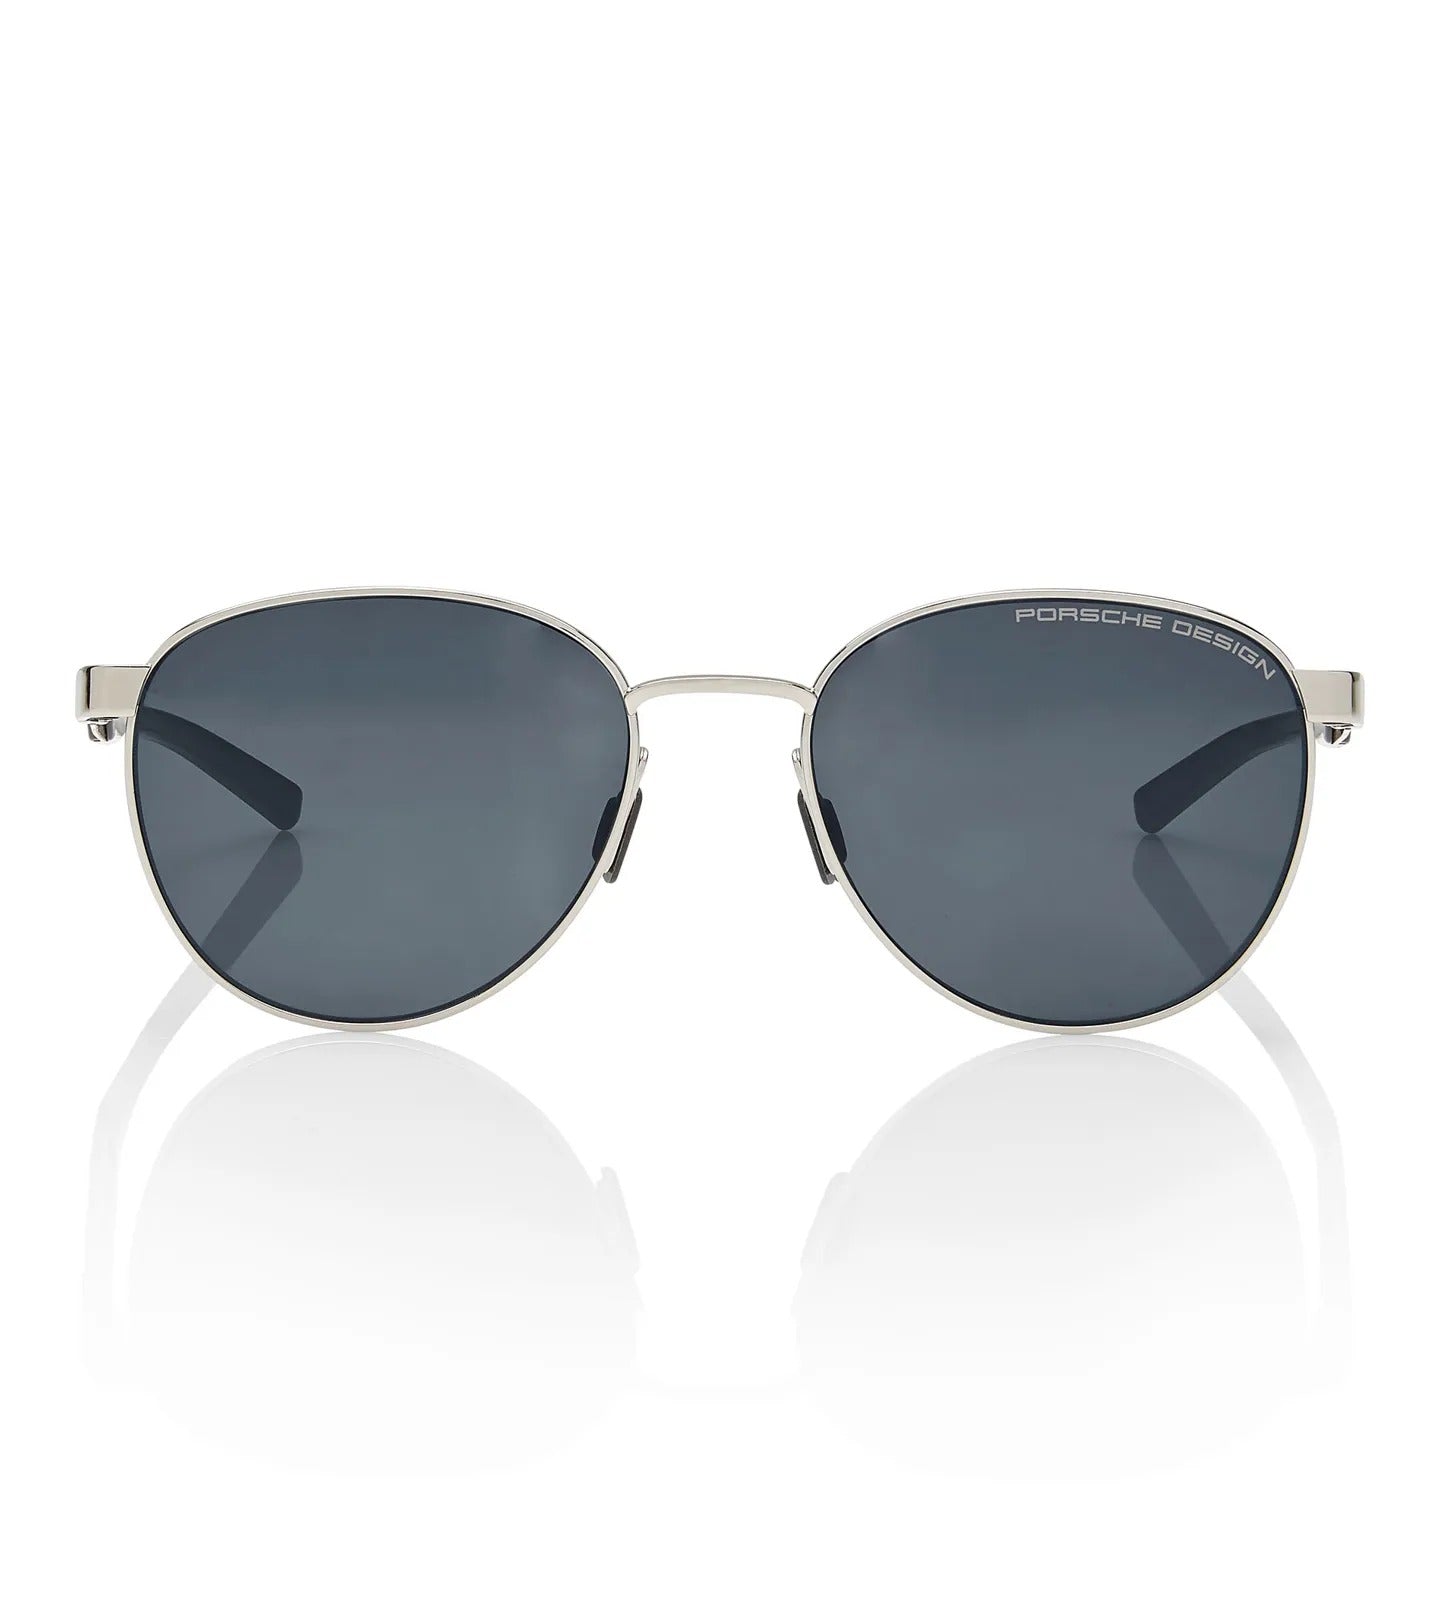 Porsche Design Men's Blue-Black Round Sunglasses